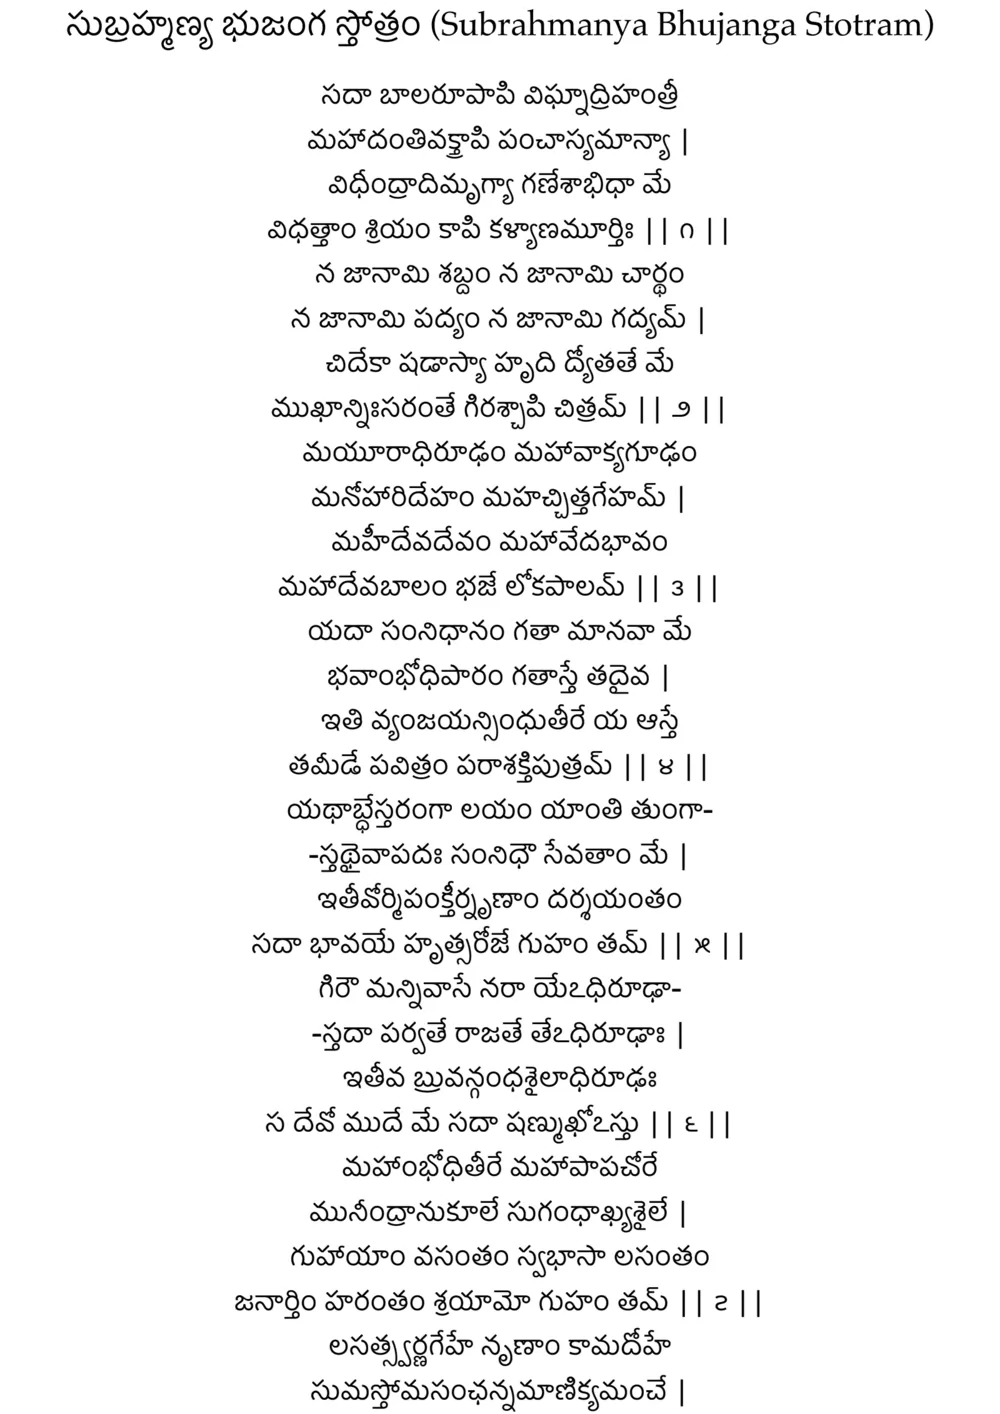 Subrahmanya Bhujanga Stotram PDF in Telugu